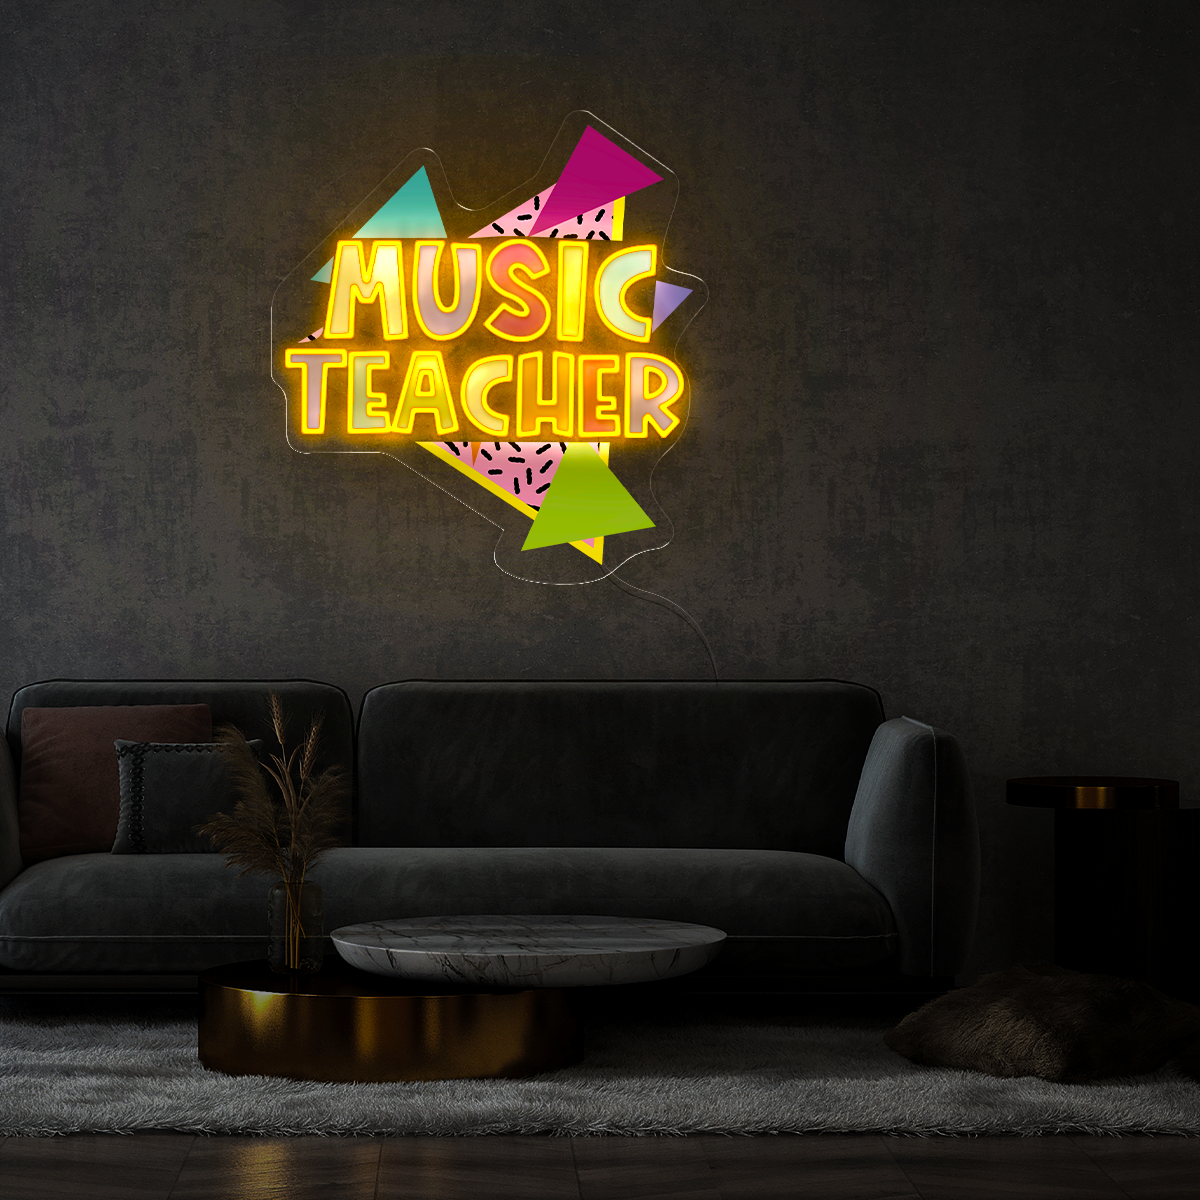 90s Style Music Teacher Artwork Neon Sign